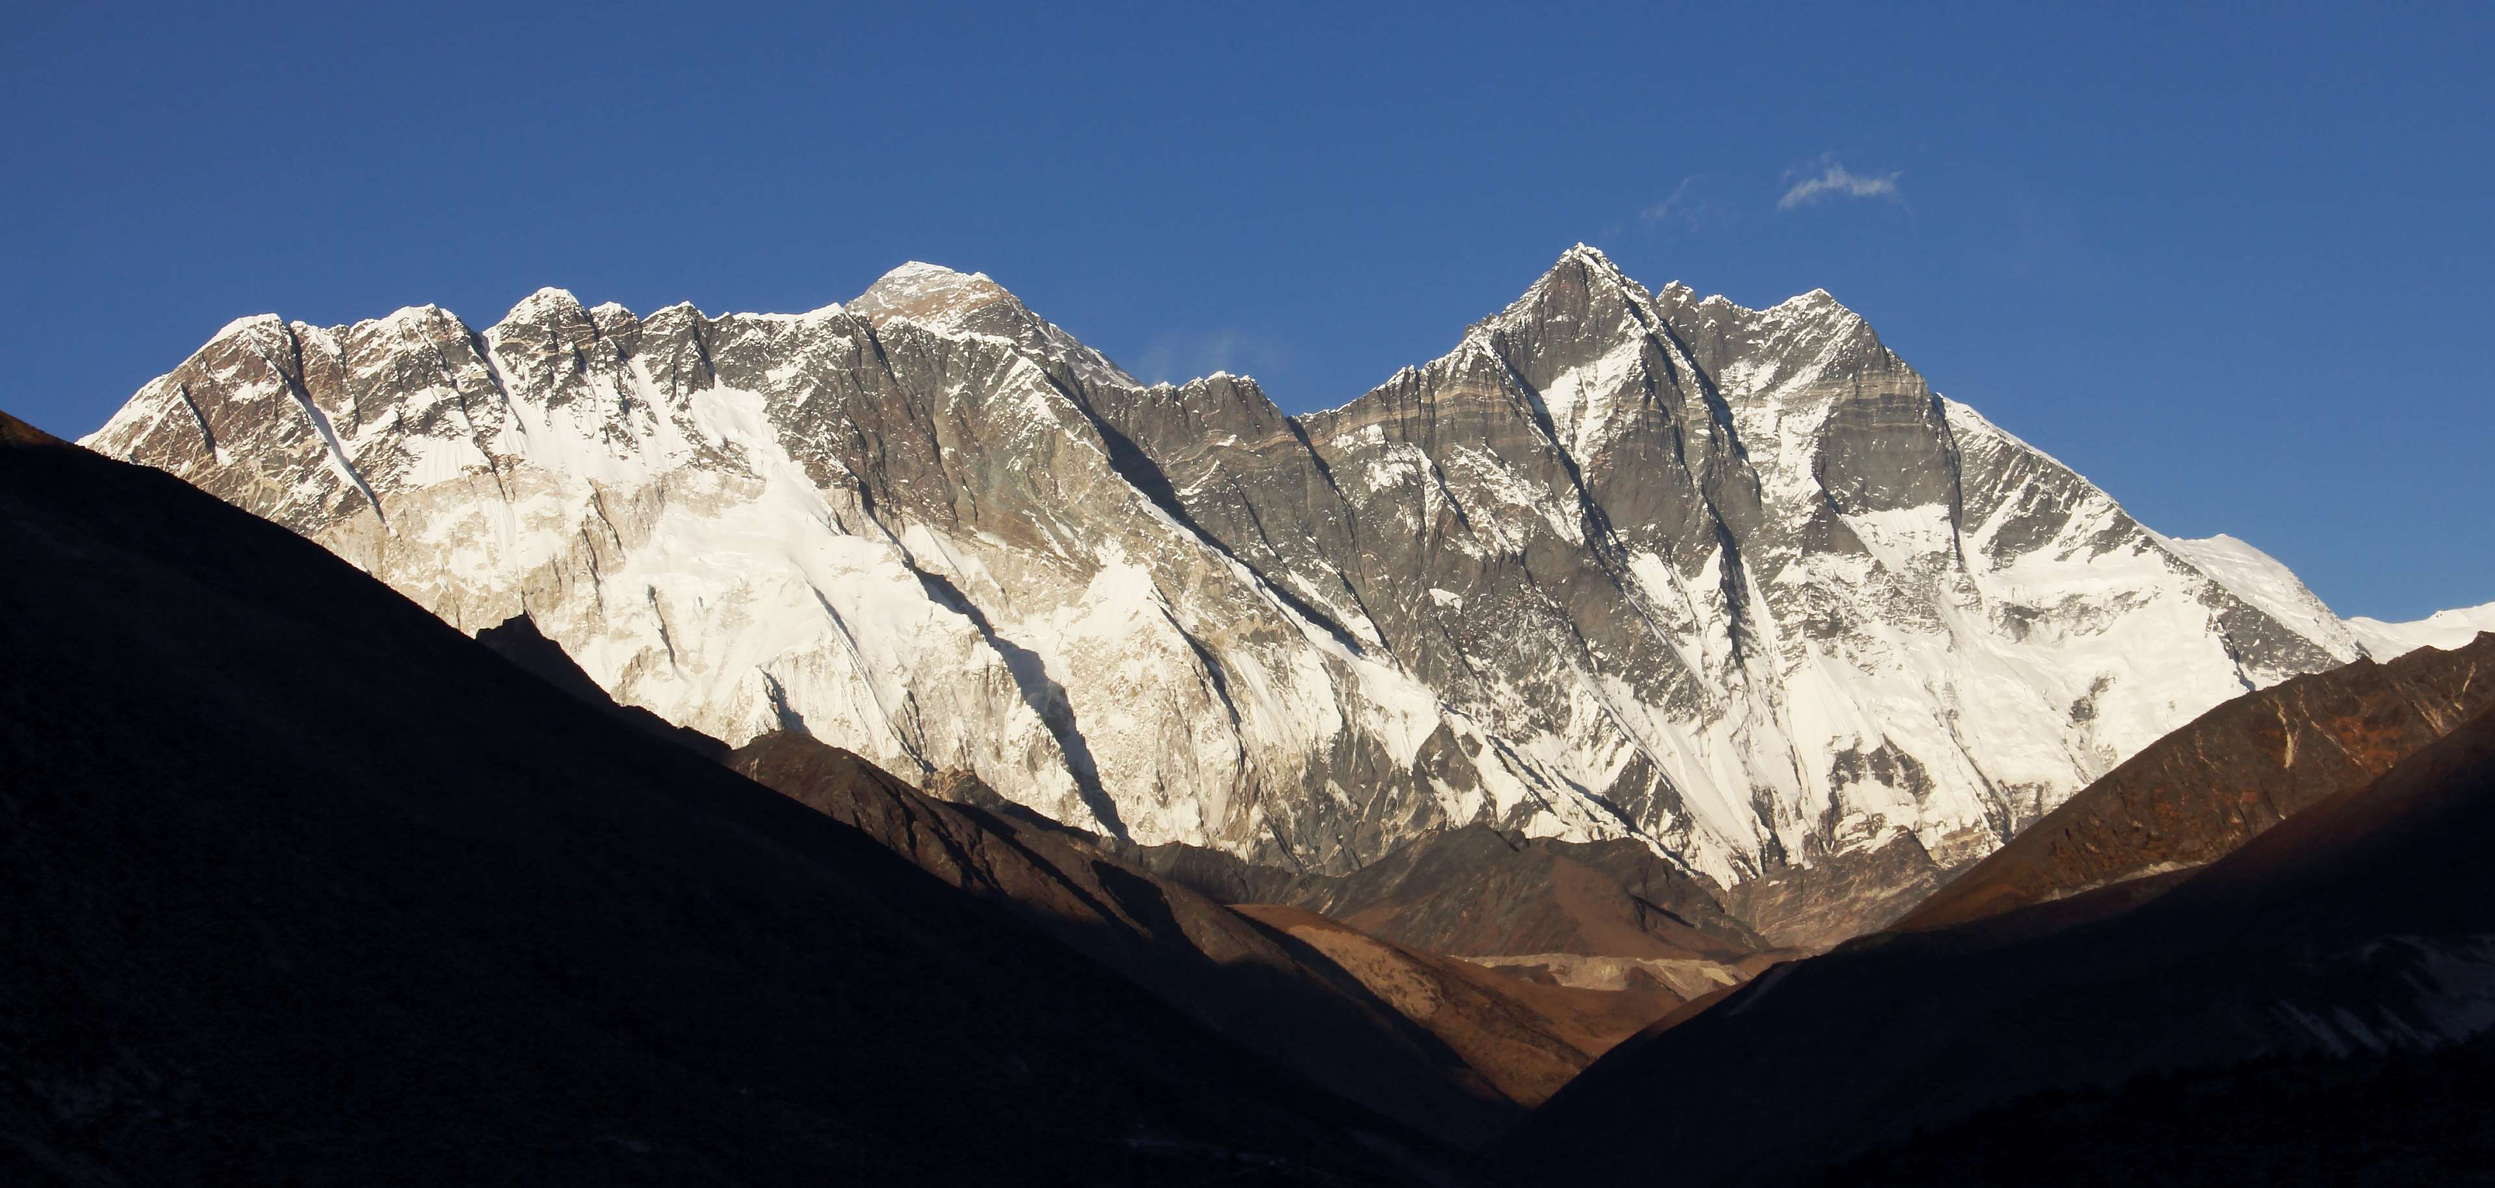 Khumbu Himal  |  Mt. Everest and Lhotse